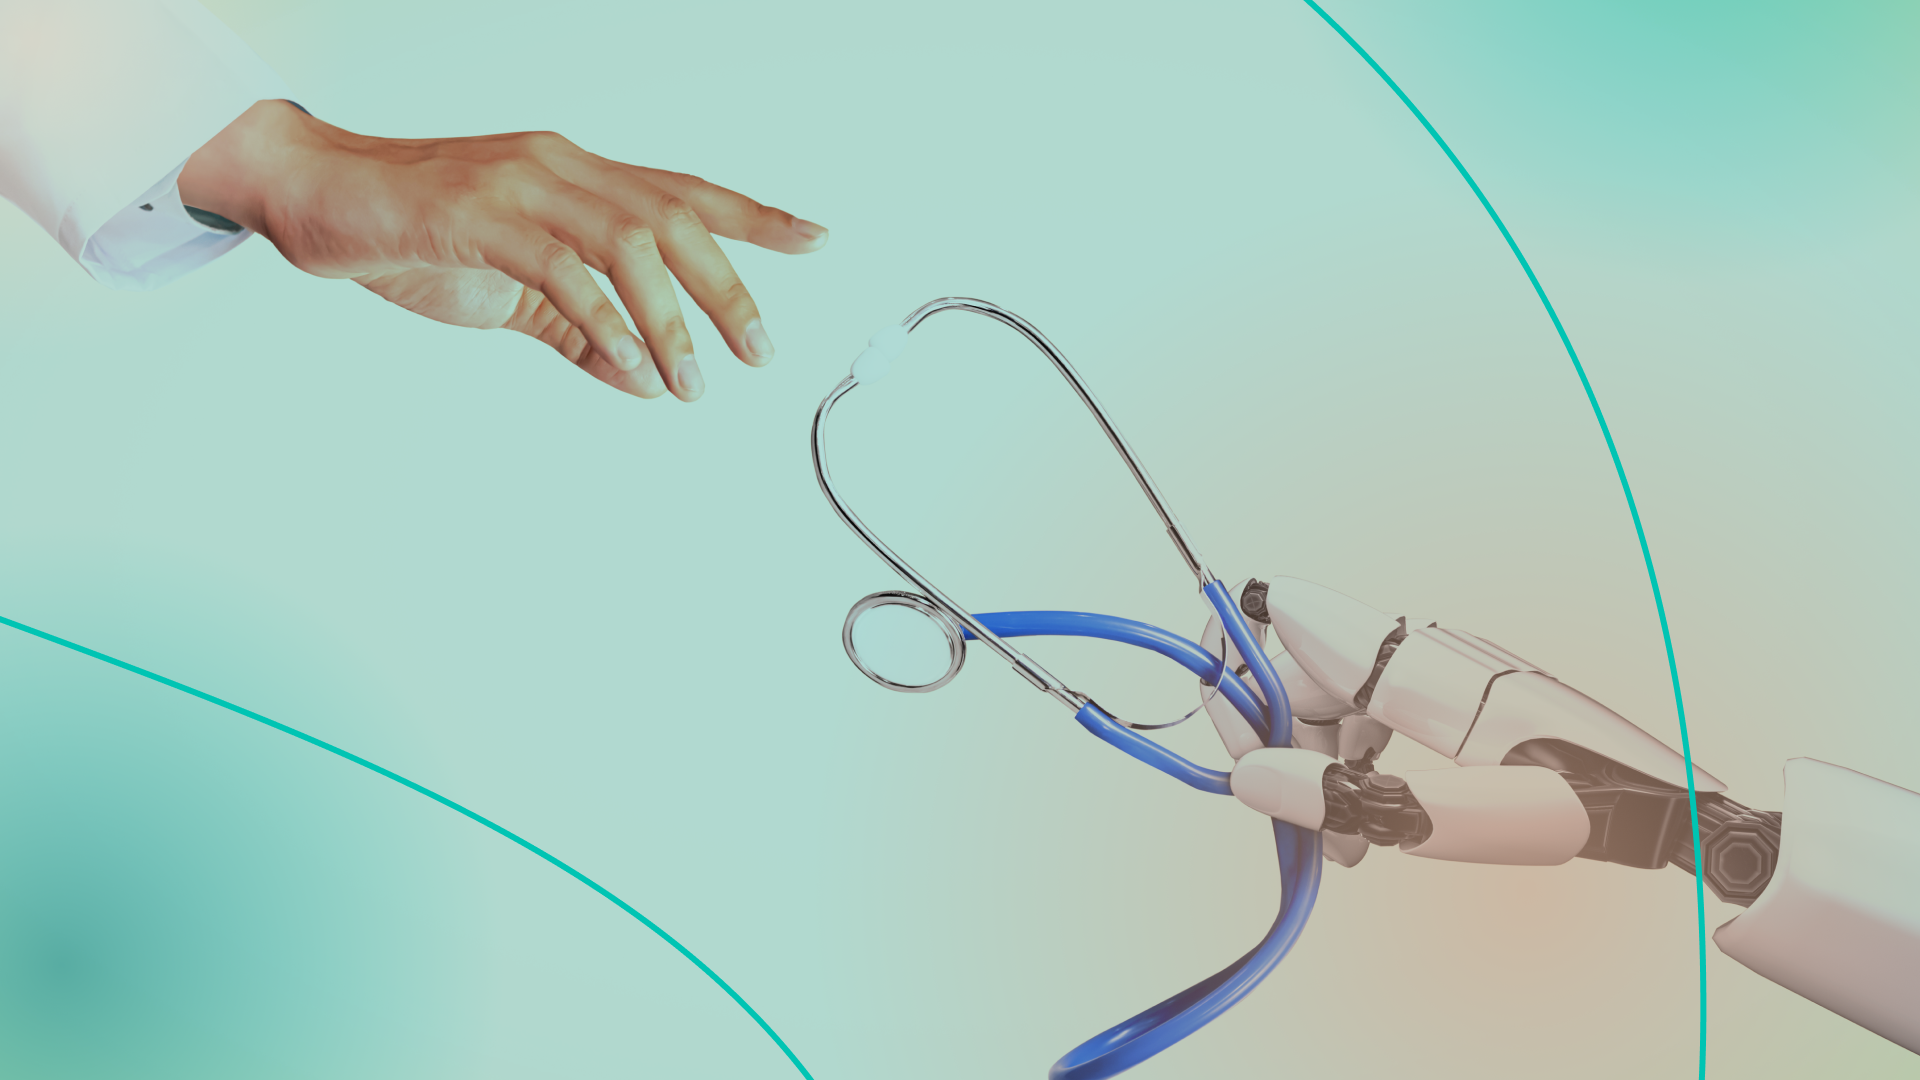 human hand reaching toward robot hand holding stethoscope 